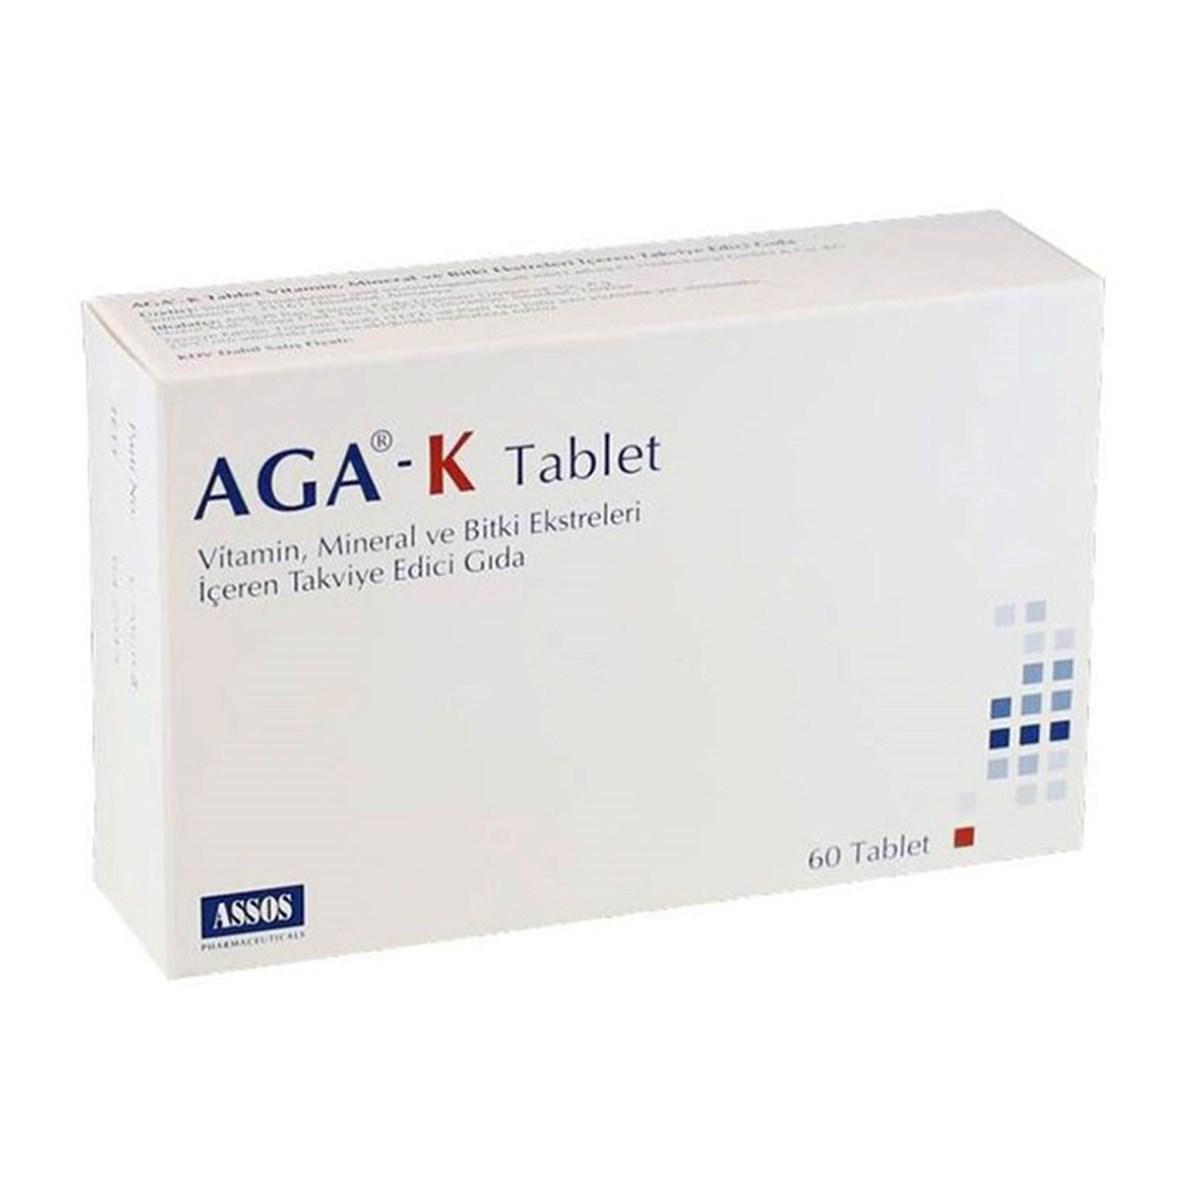 Assos Aga-K Sade Unisex Vitamin 60 Tablet